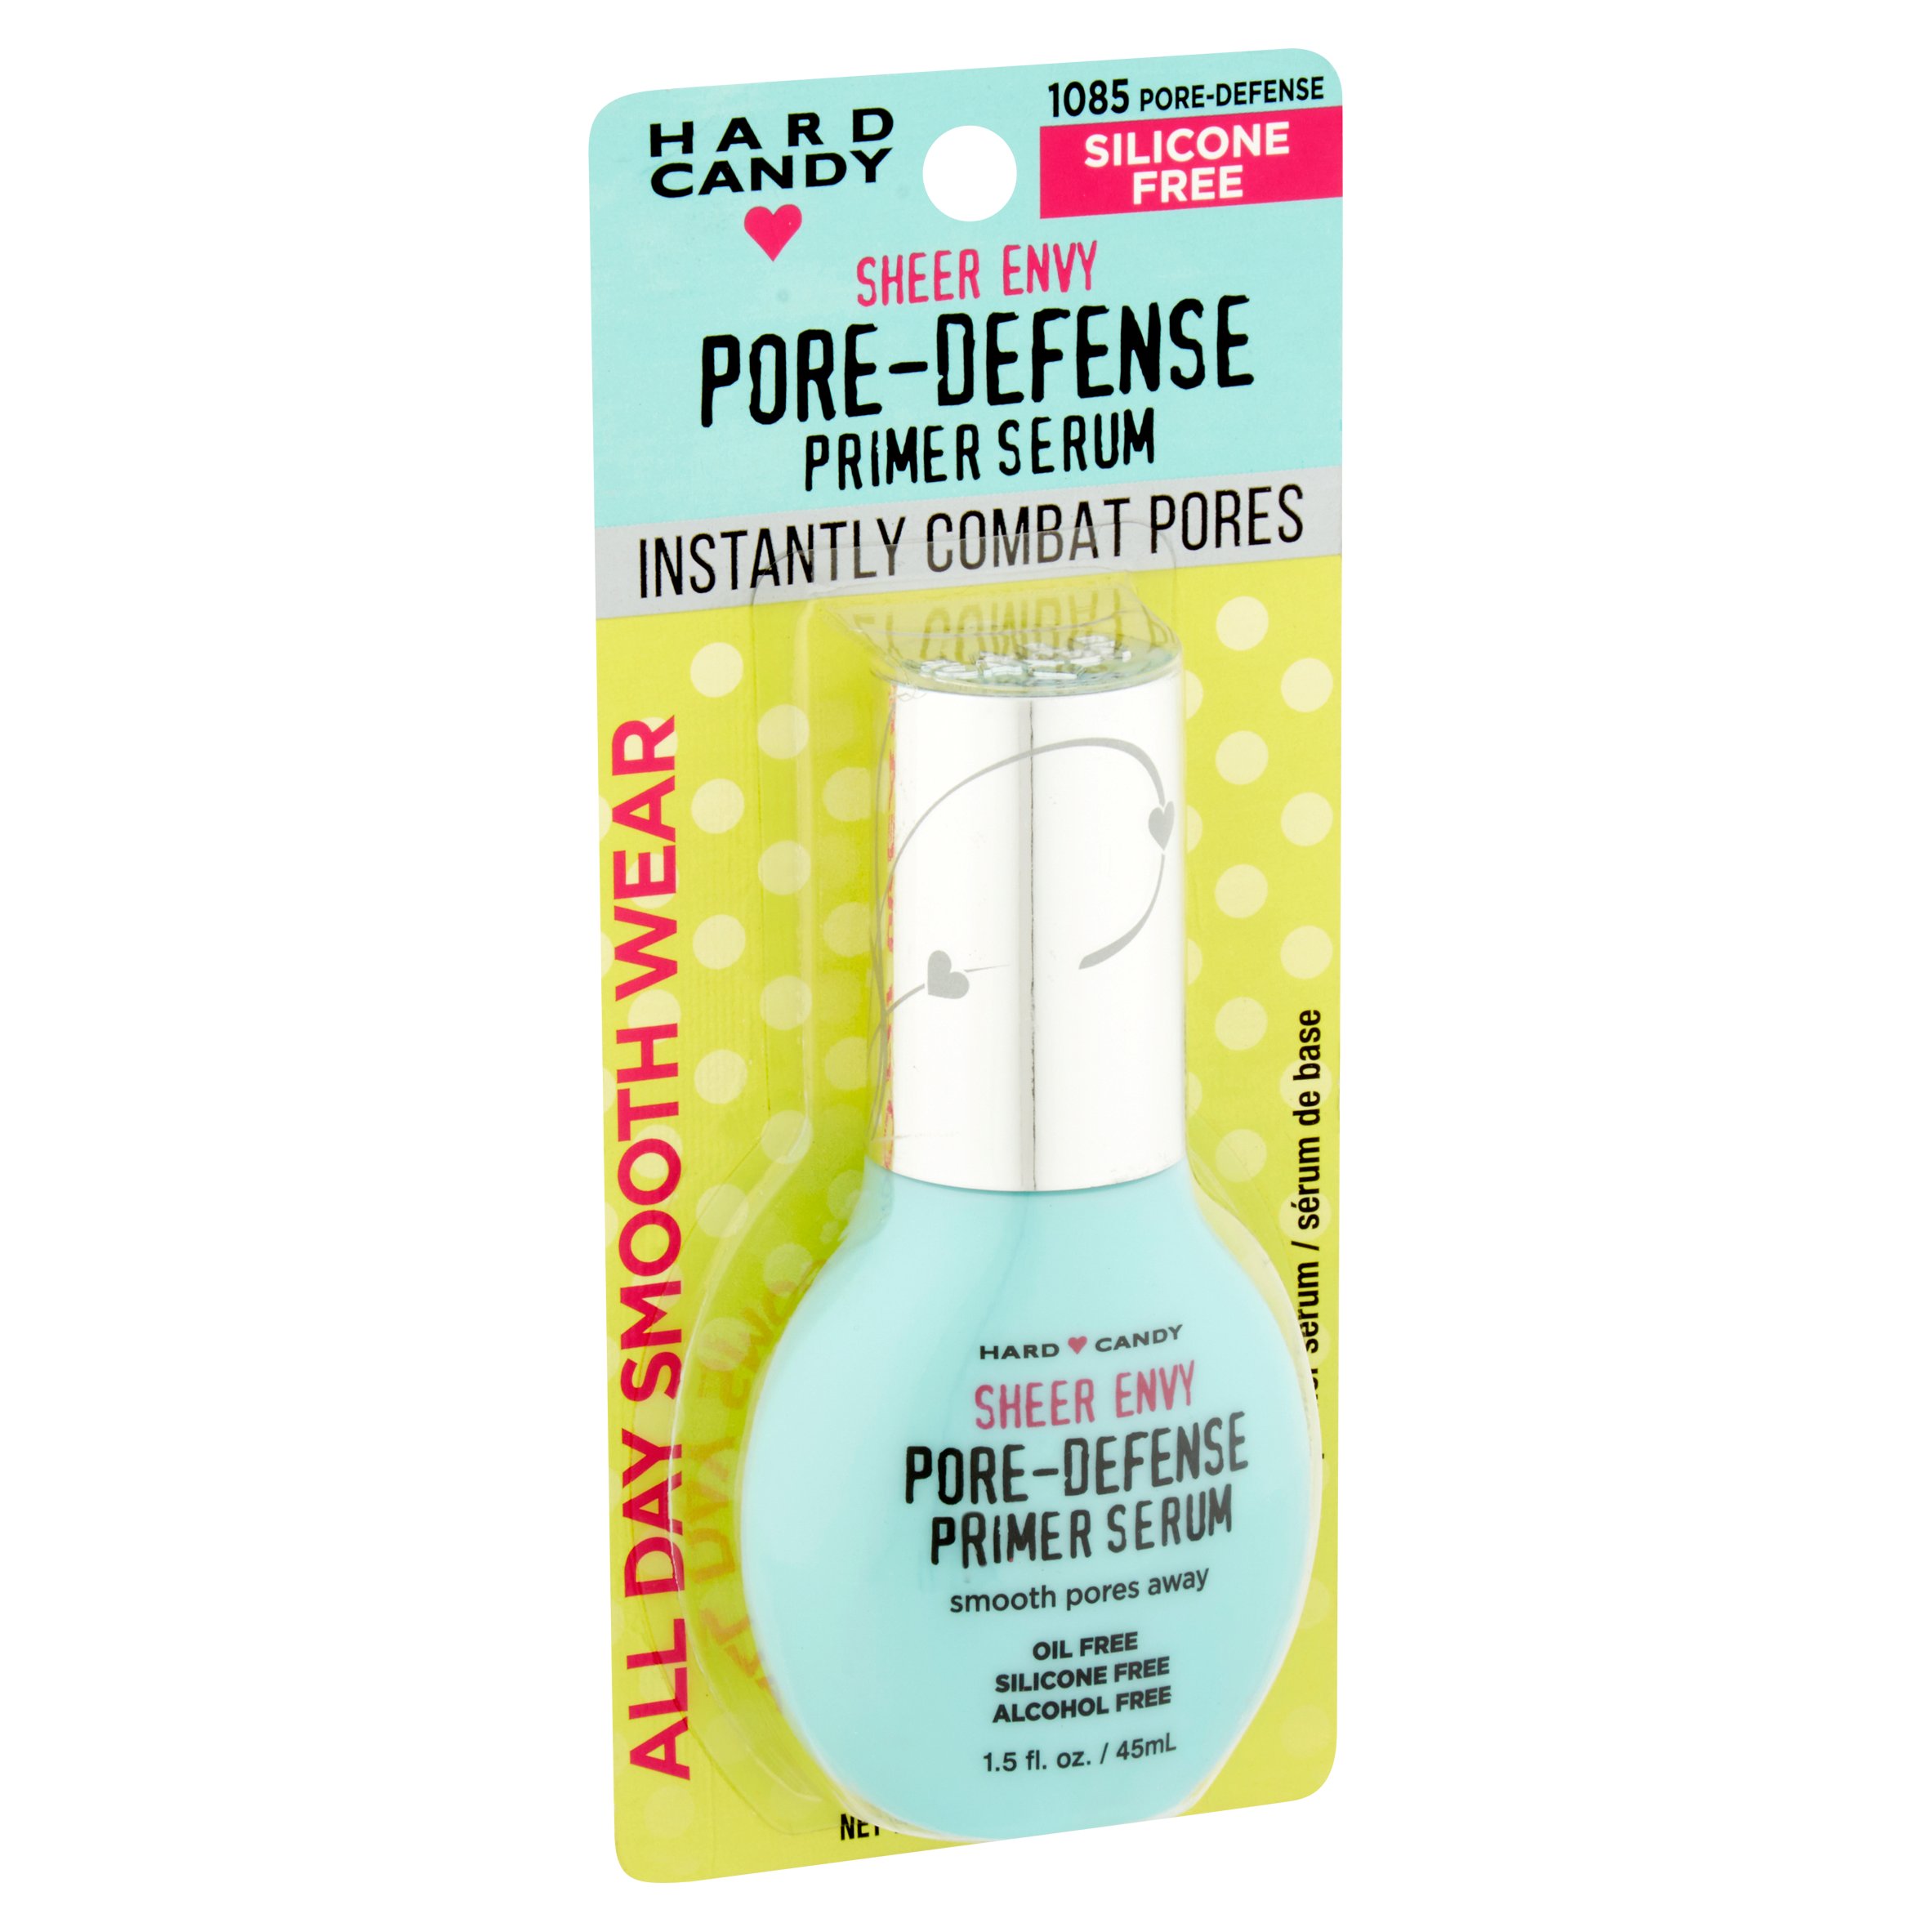 Hard Candy Sheer Envy Pore-Defense Primer Serum, 1.5 fl oz - image 2 of 5